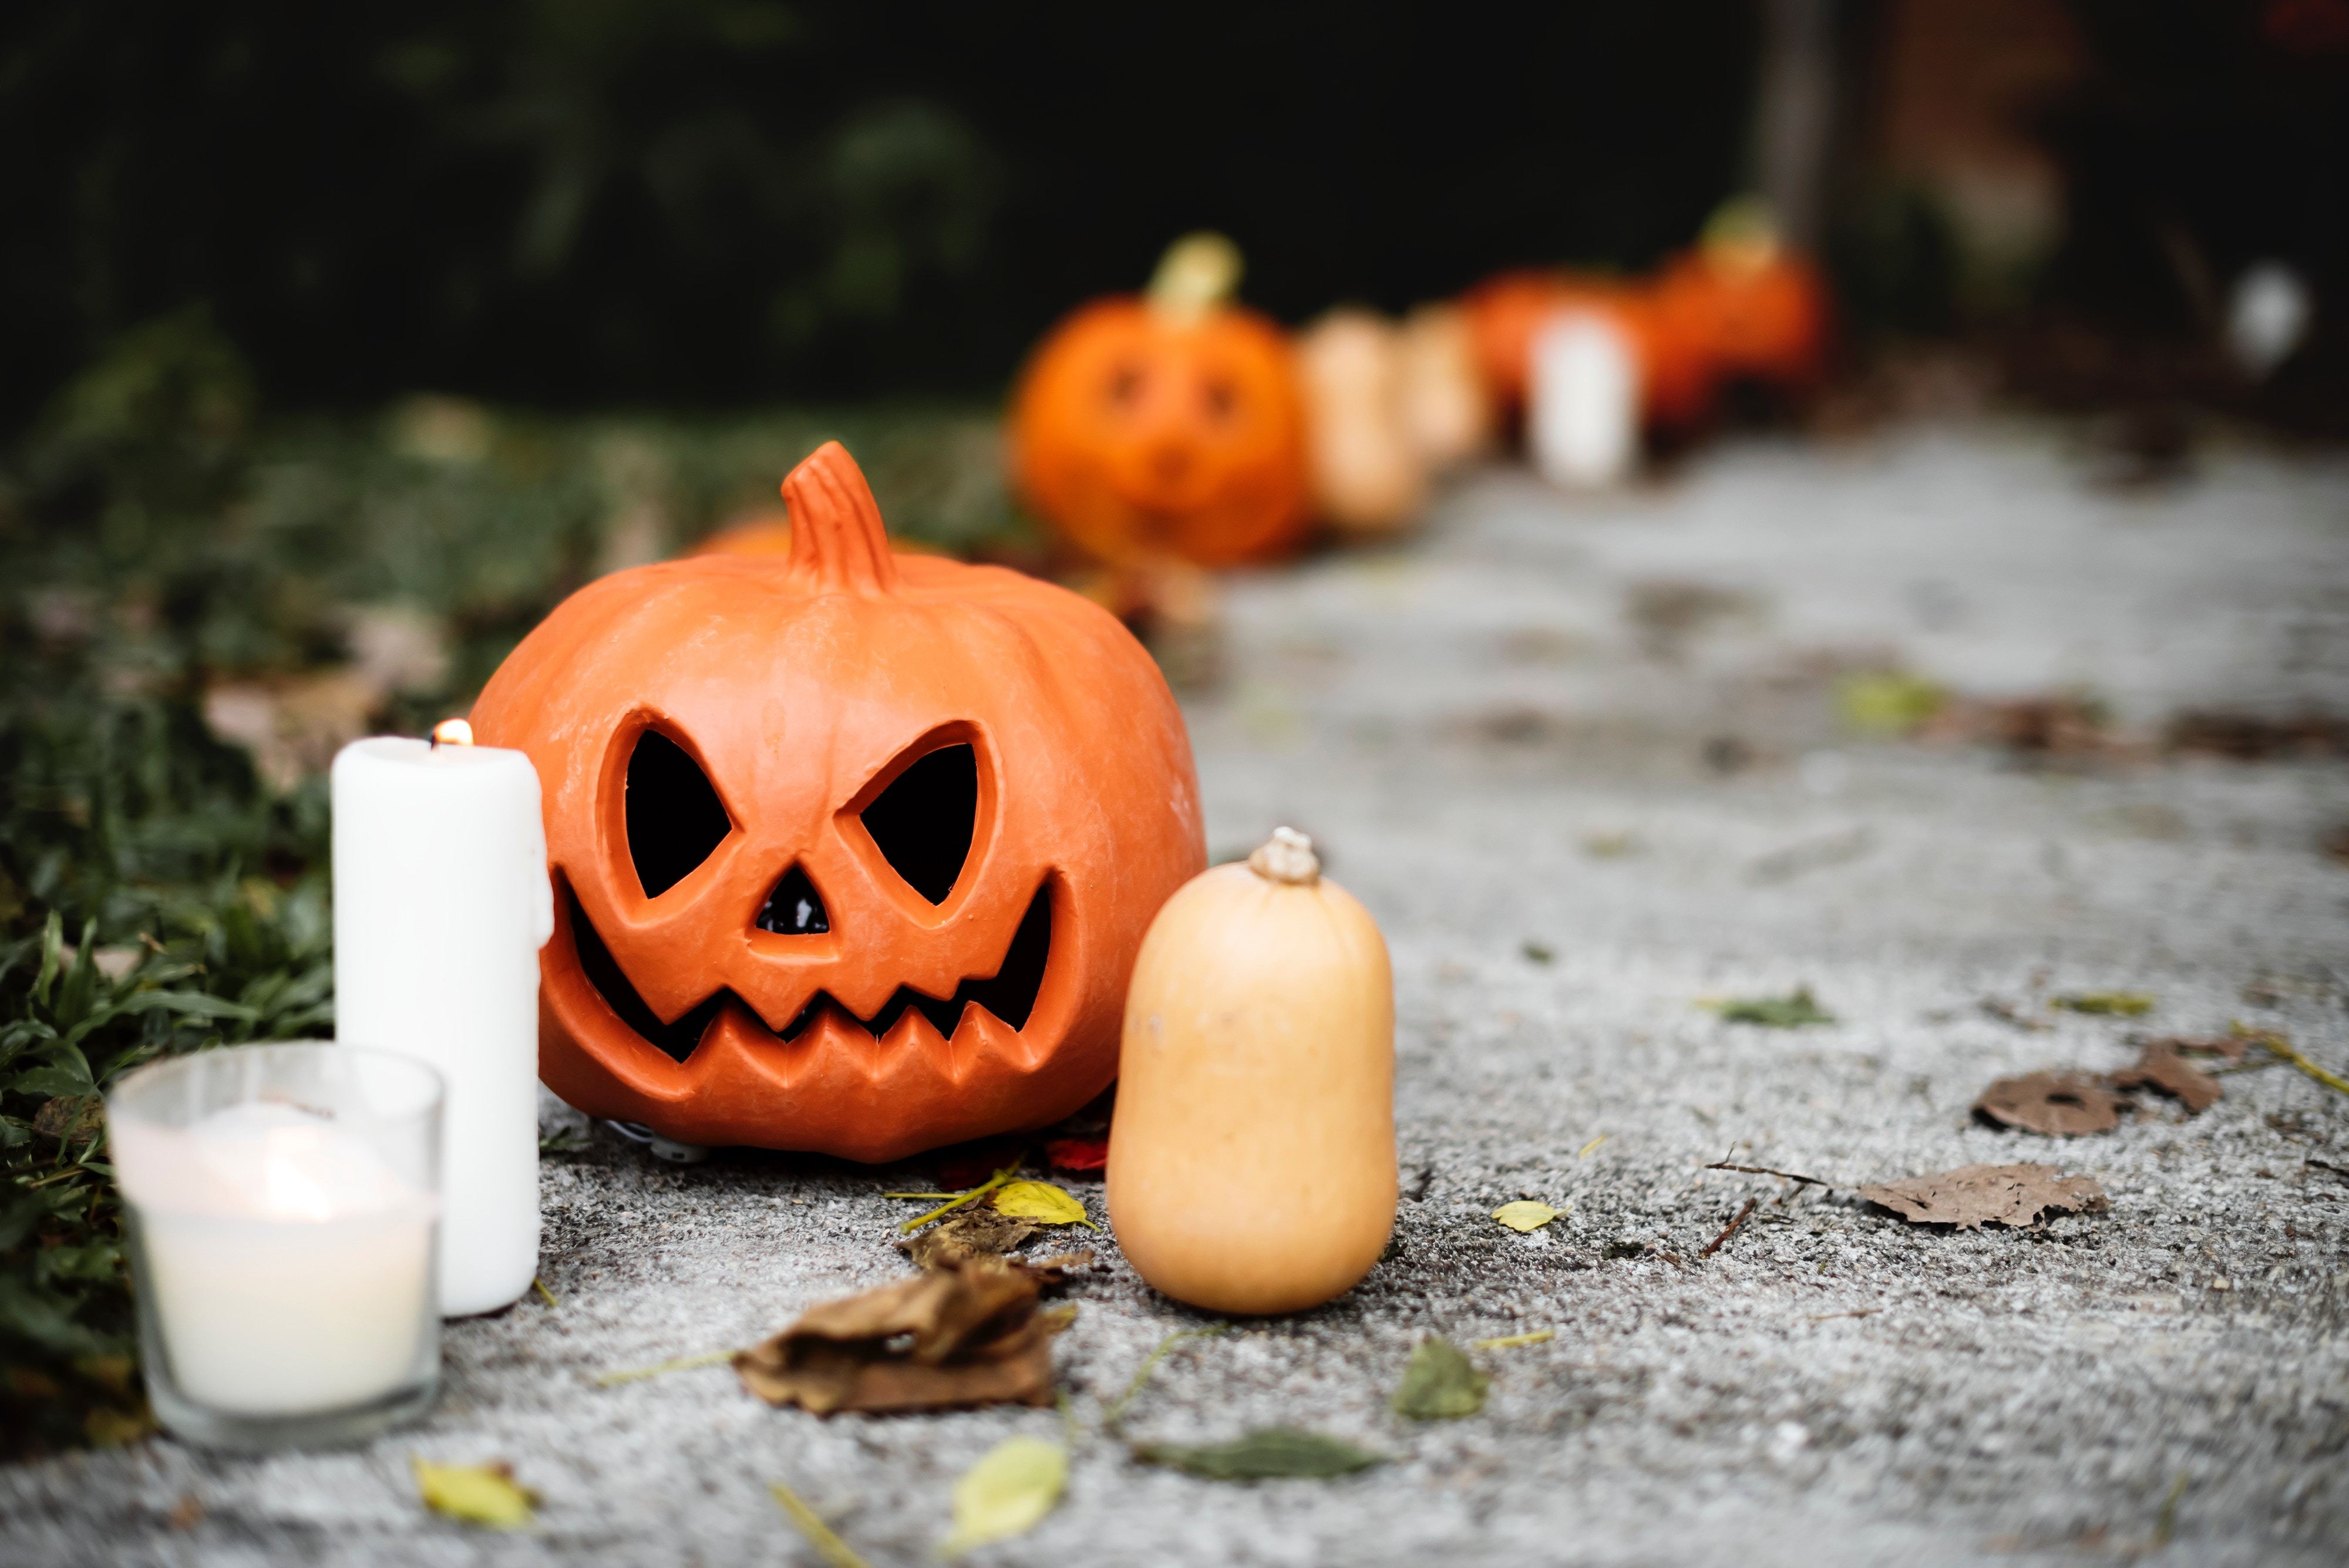 Why We Celebrate Halloween